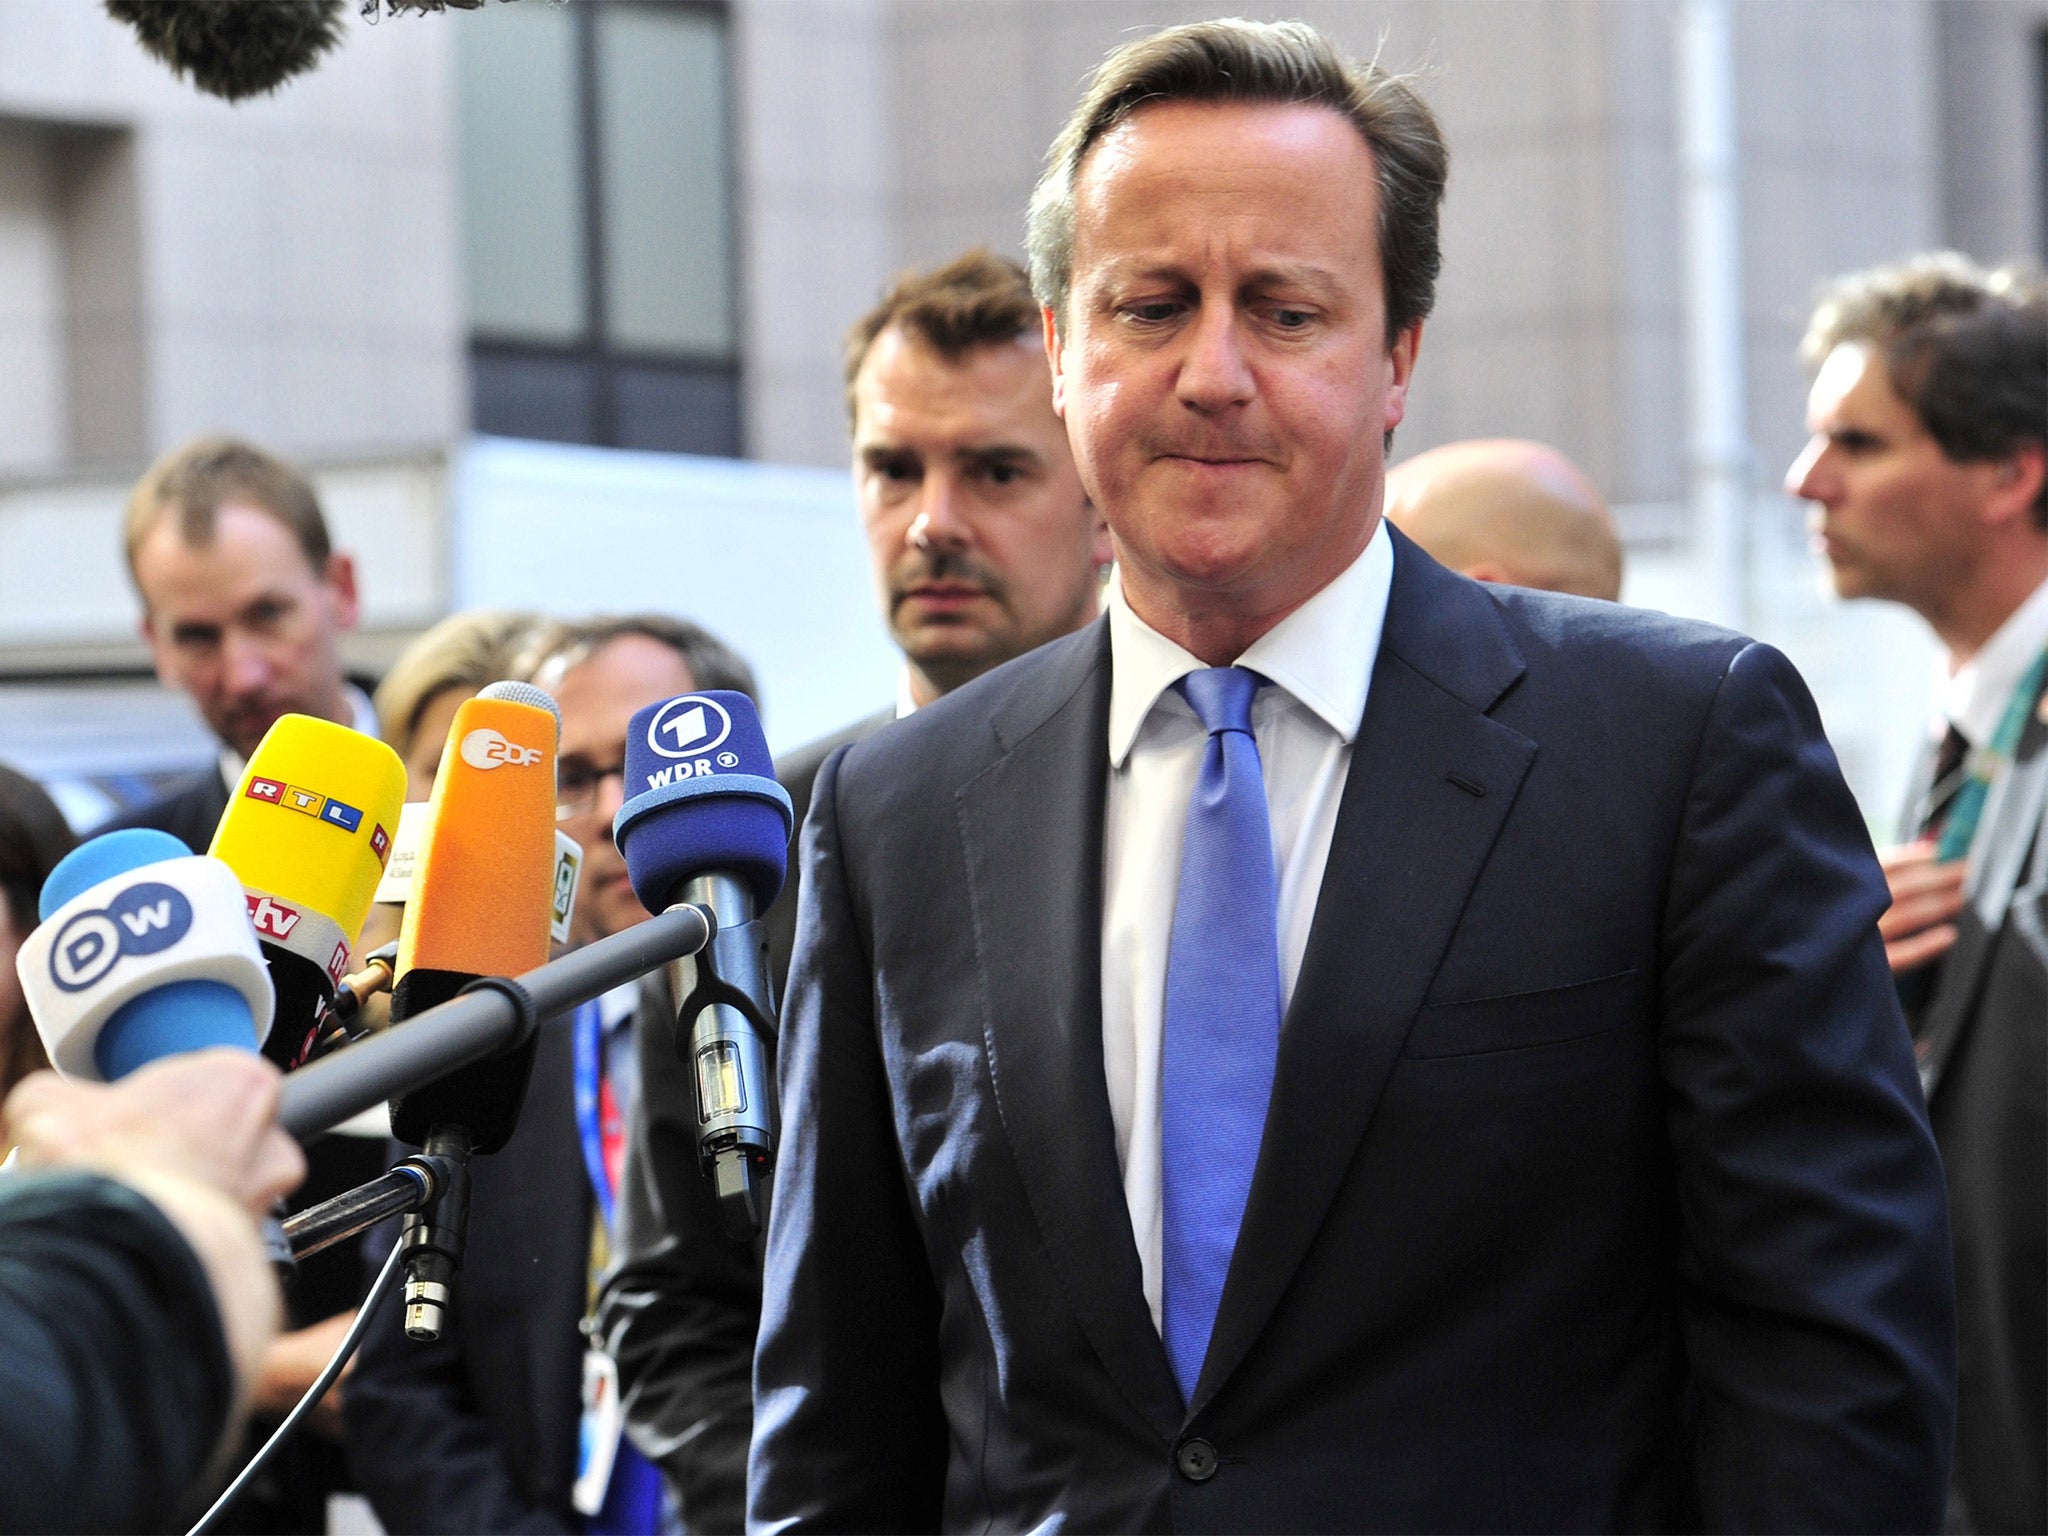 Prime Minister David Cameron arriving in Brussels